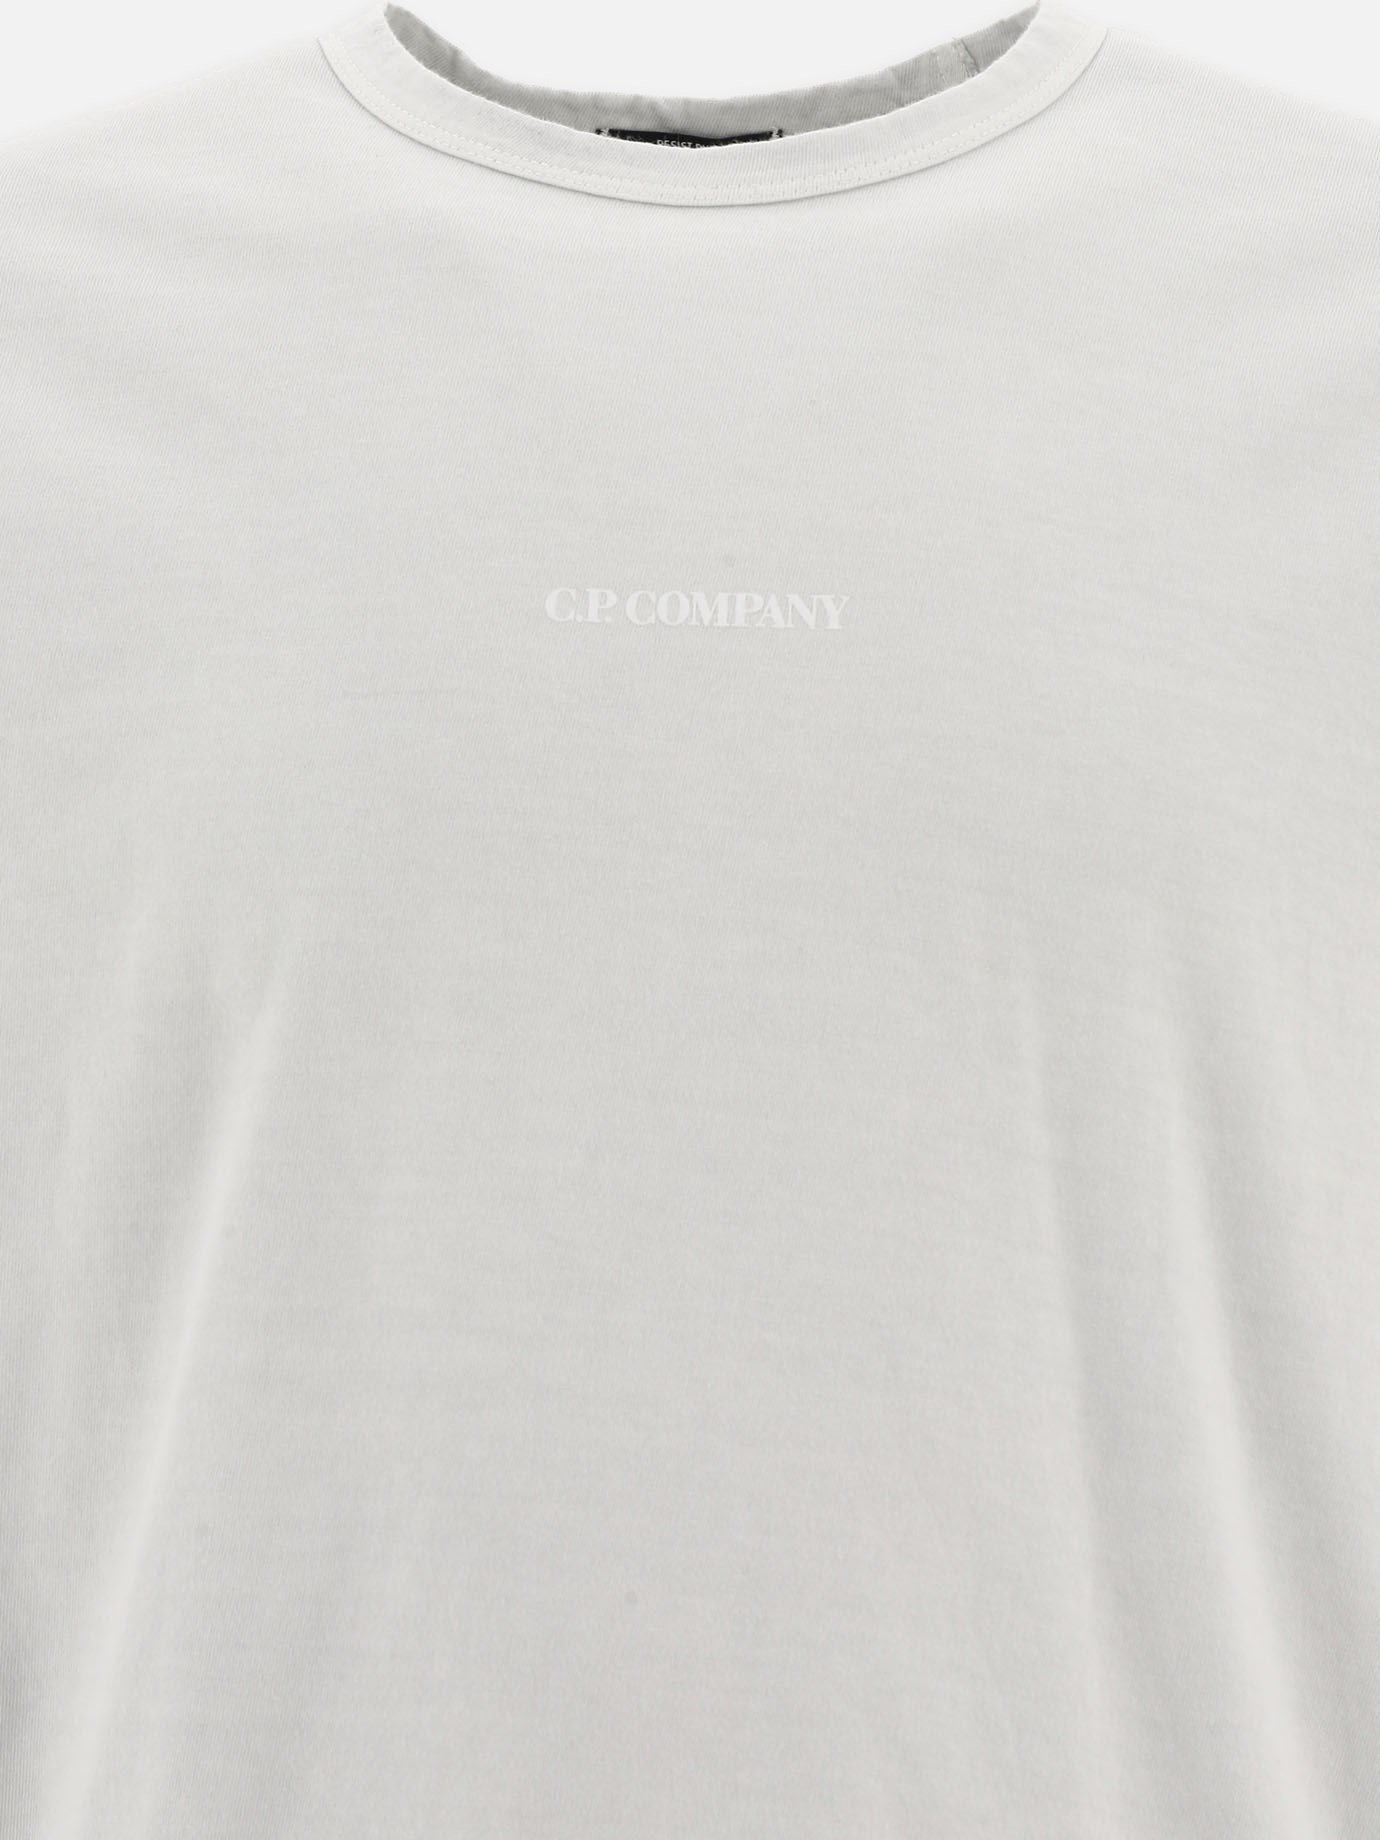 T-shirt  Tonal  by C.P. Company